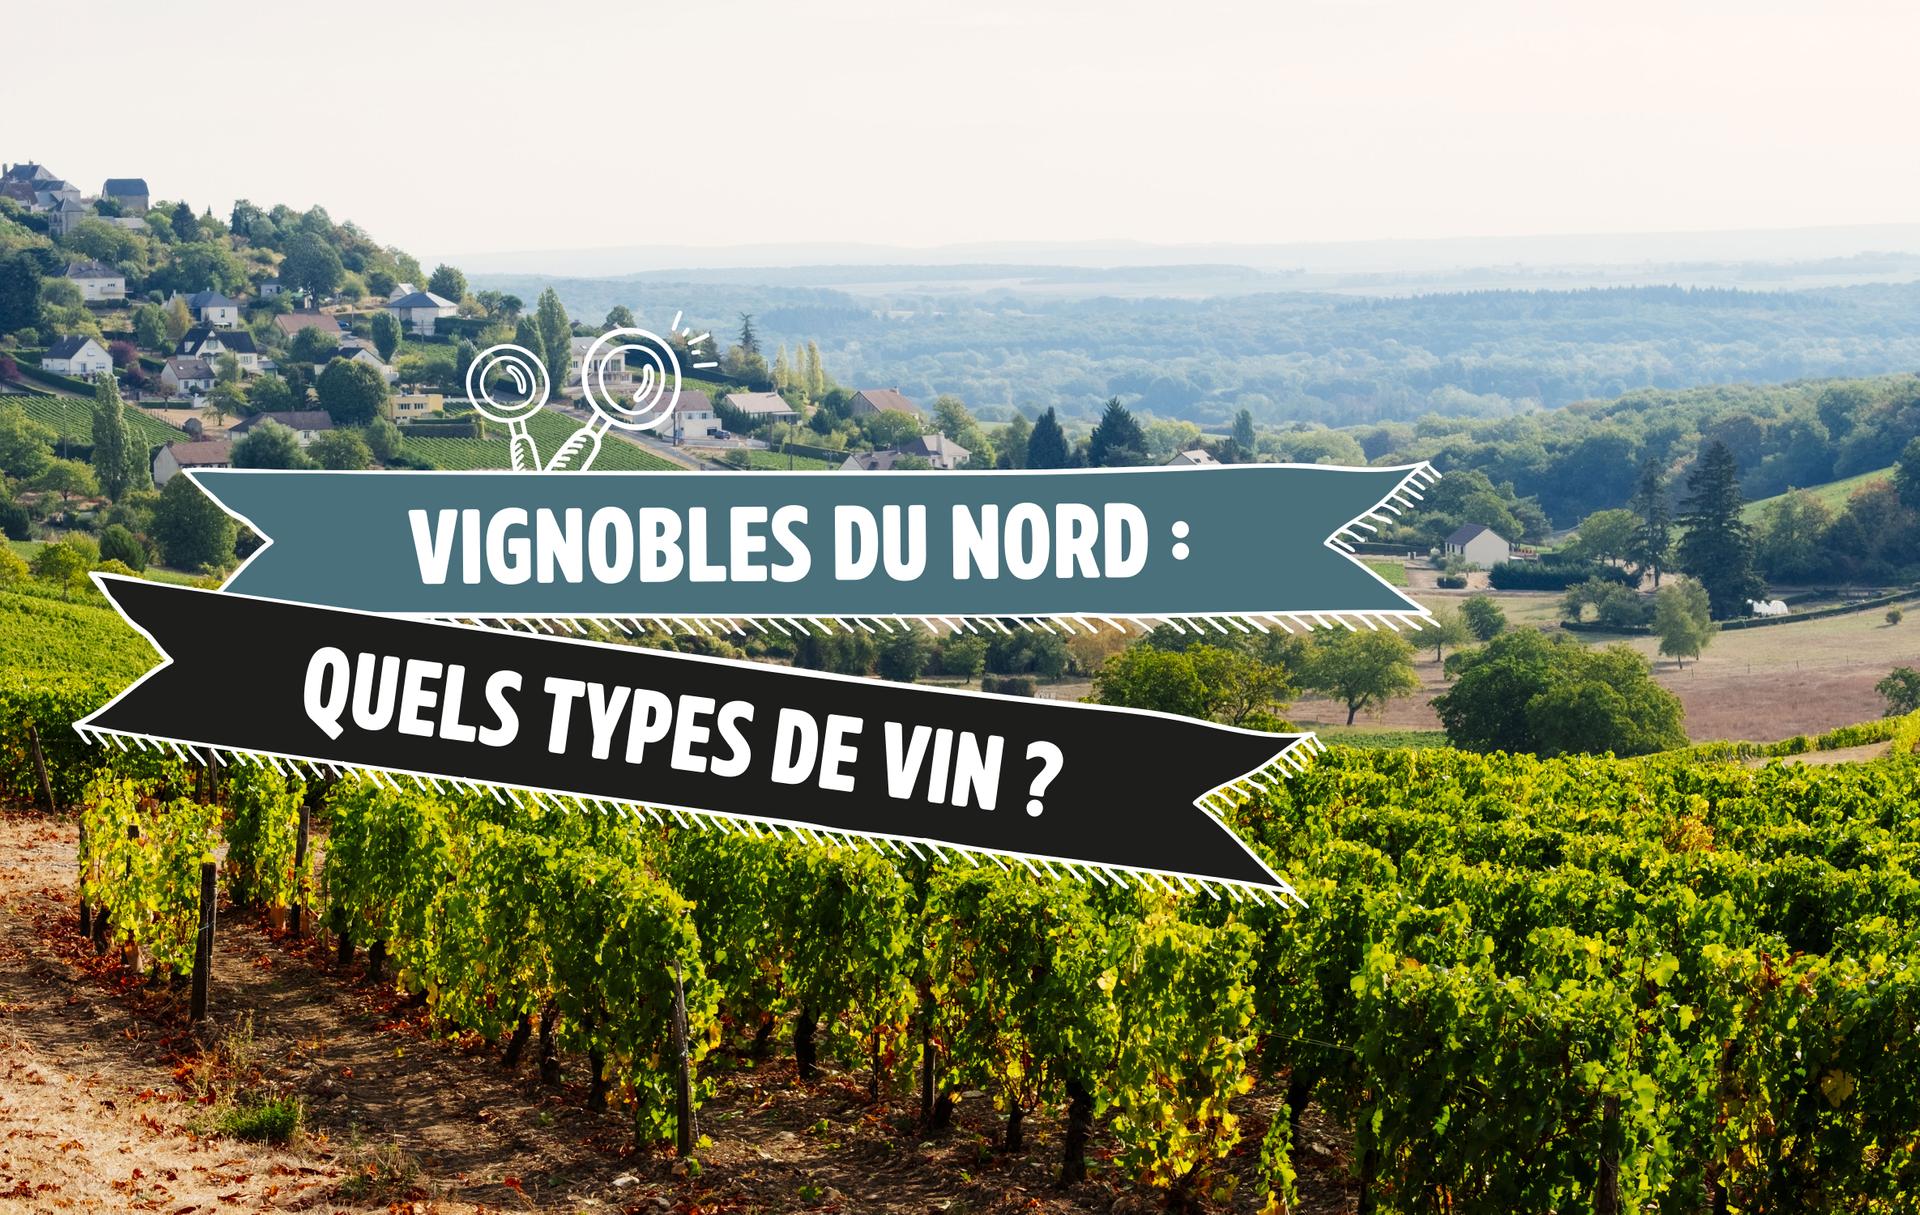 Vignobles du nord : quels types de vins ?